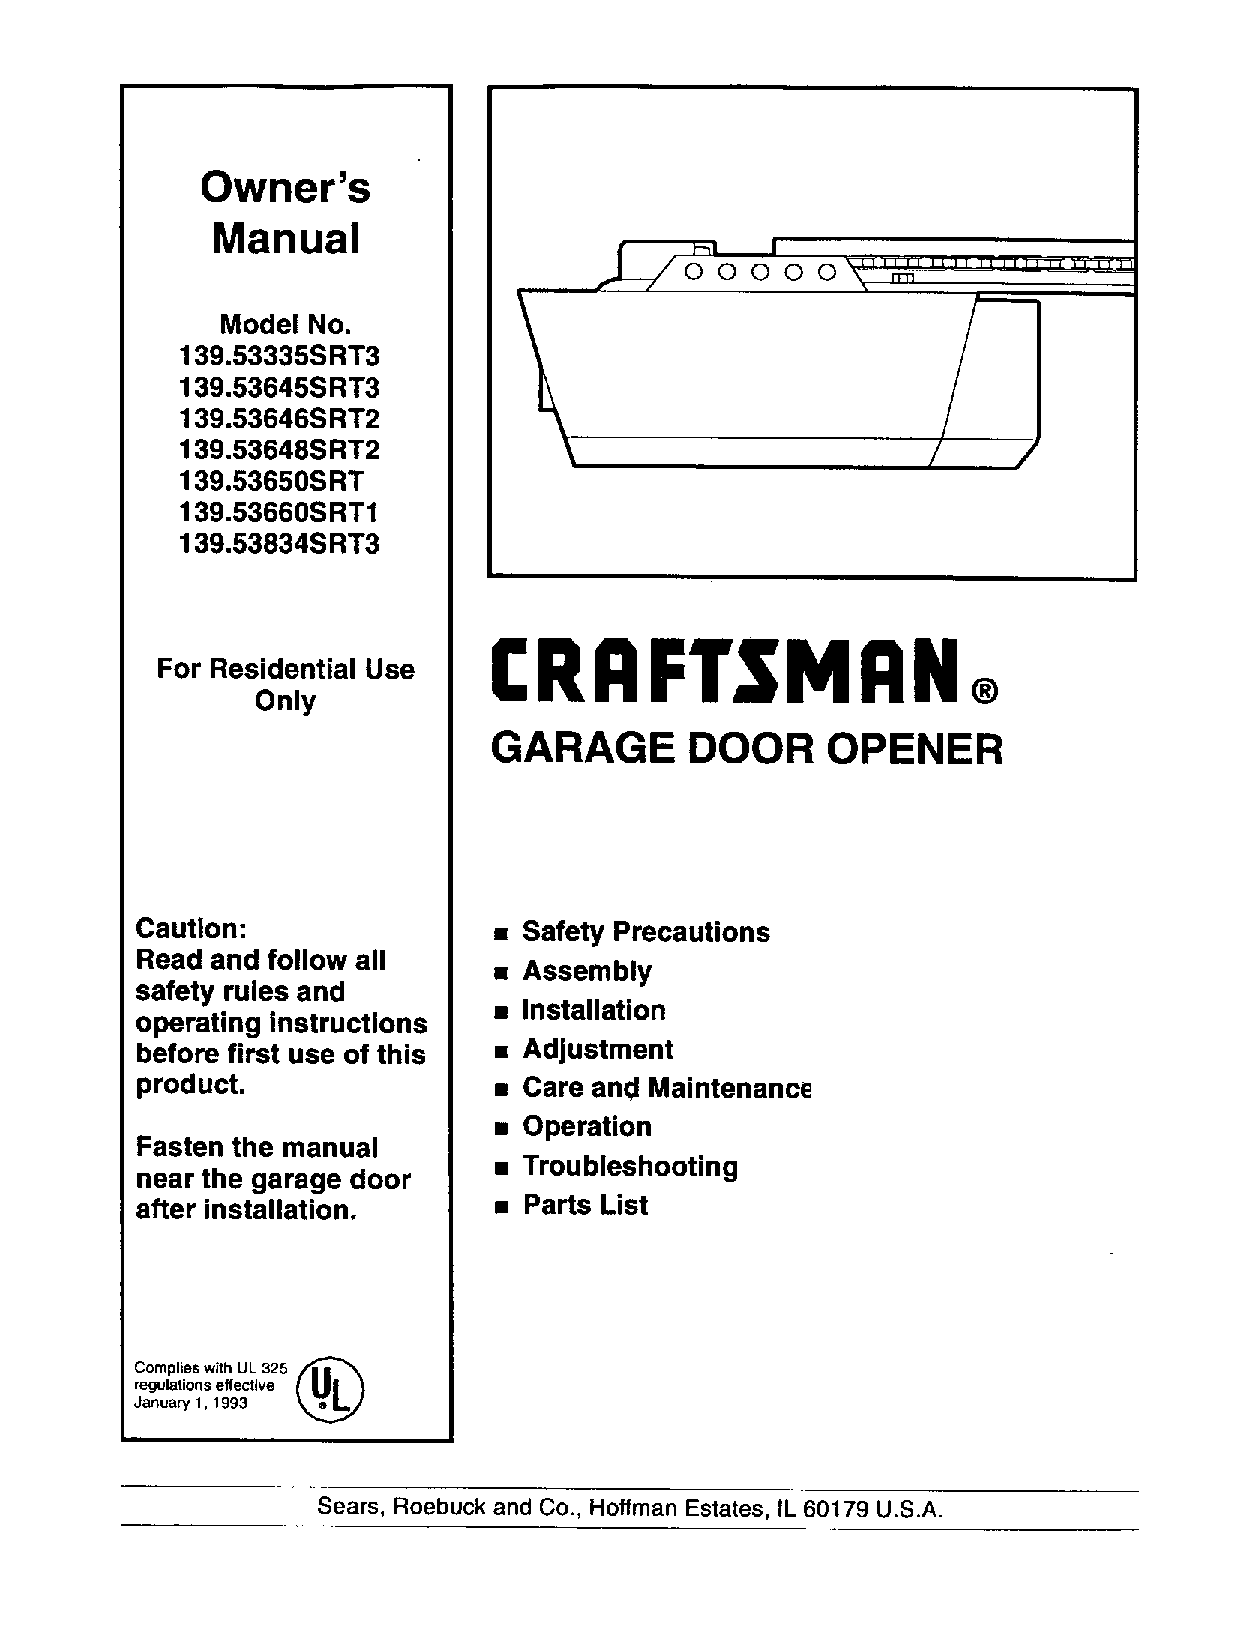 Craftsman 139.53660SRT1, 139.53834SRT3, 139.53648SRT2, 139.53645SRT3, 139.53646SRT2 User Manual